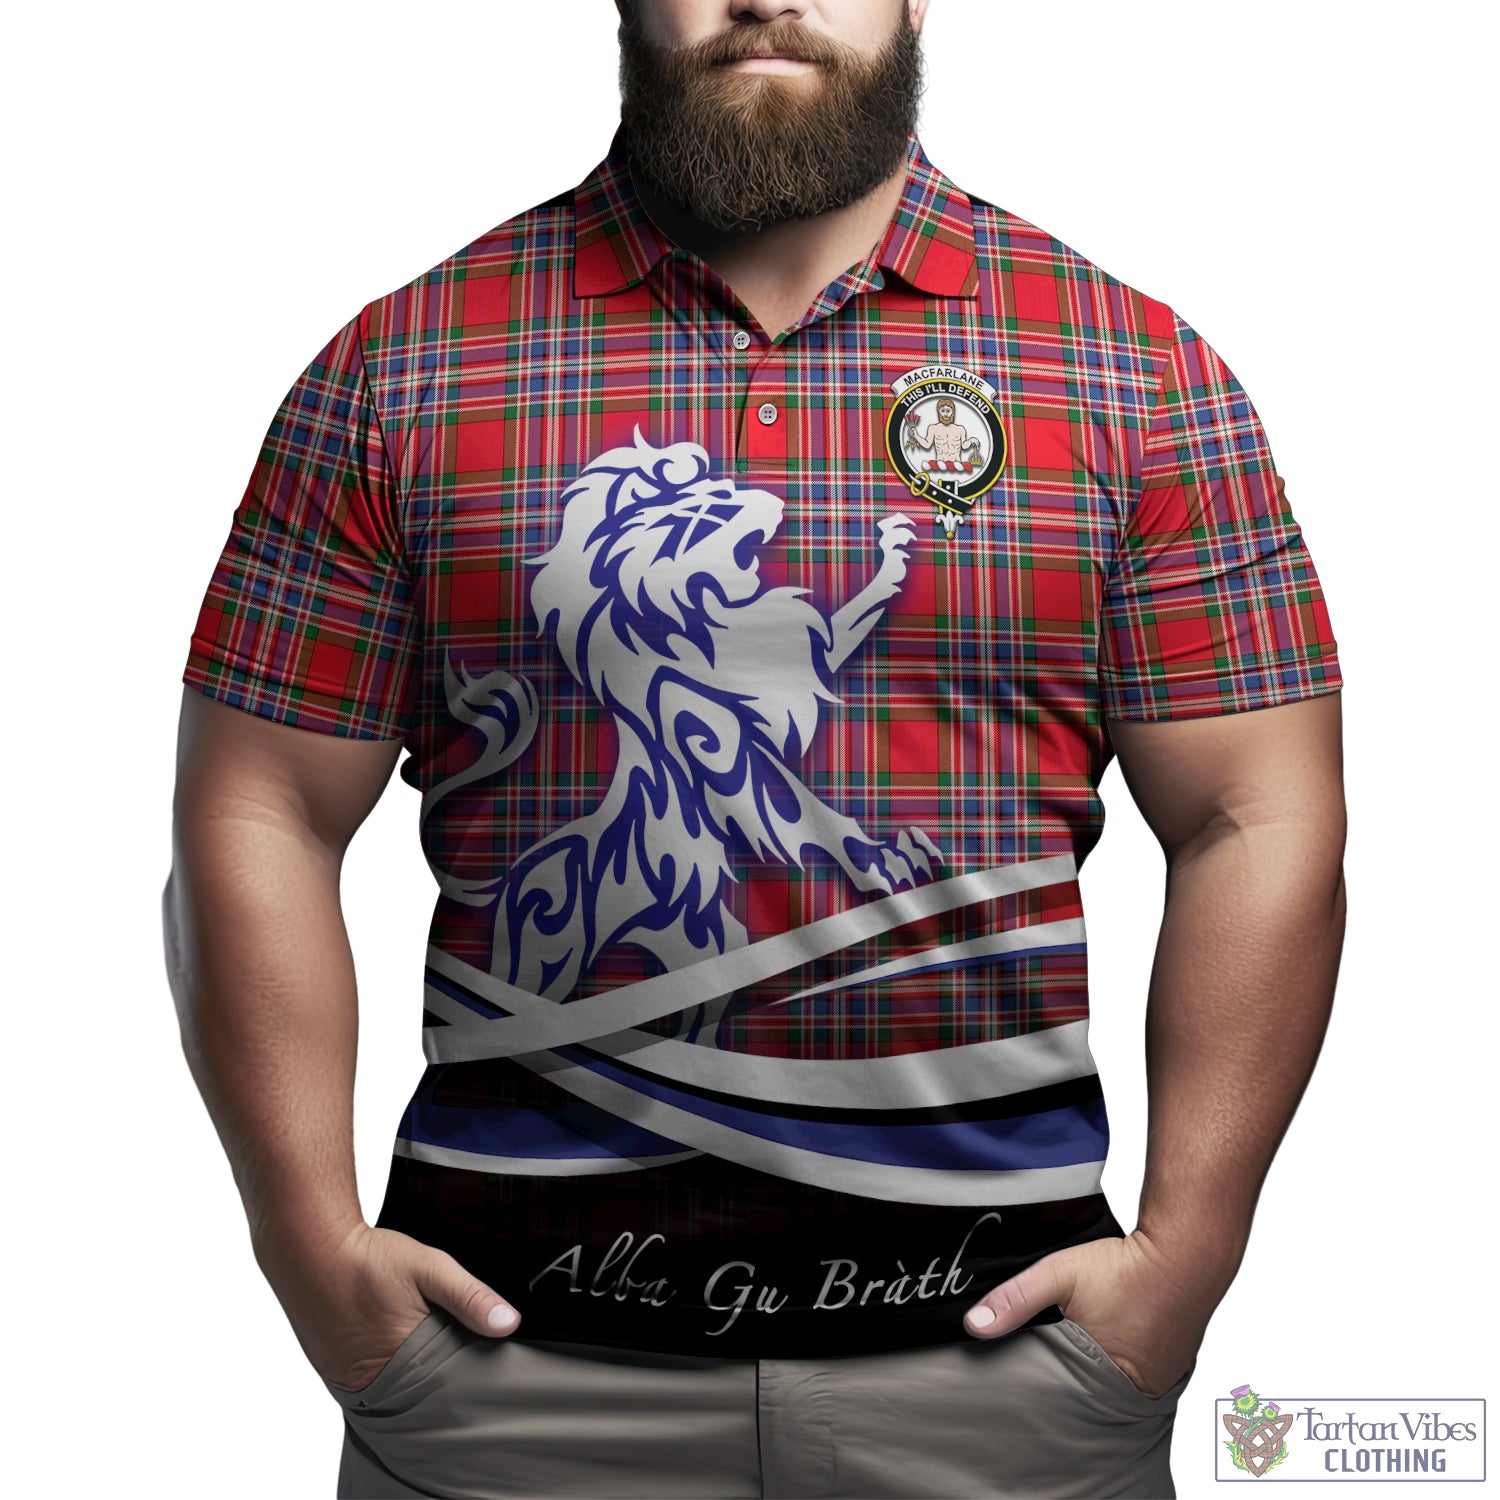 macfarlane-modern-tartan-polo-shirt-with-alba-gu-brath-regal-lion-emblem